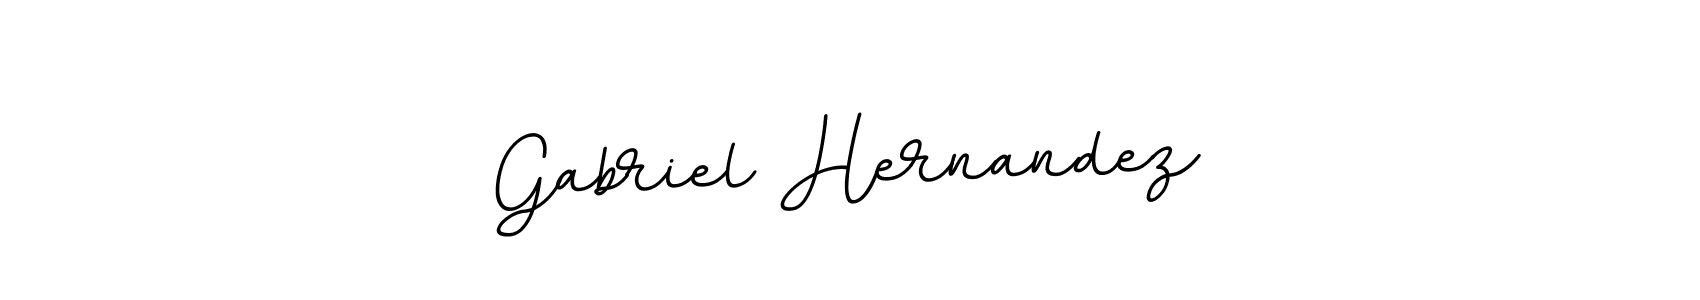 How to Draw Gabriel Hernandez signature style? BallpointsItalic-DORy9 is a latest design signature styles for name Gabriel Hernandez. Gabriel Hernandez signature style 11 images and pictures png